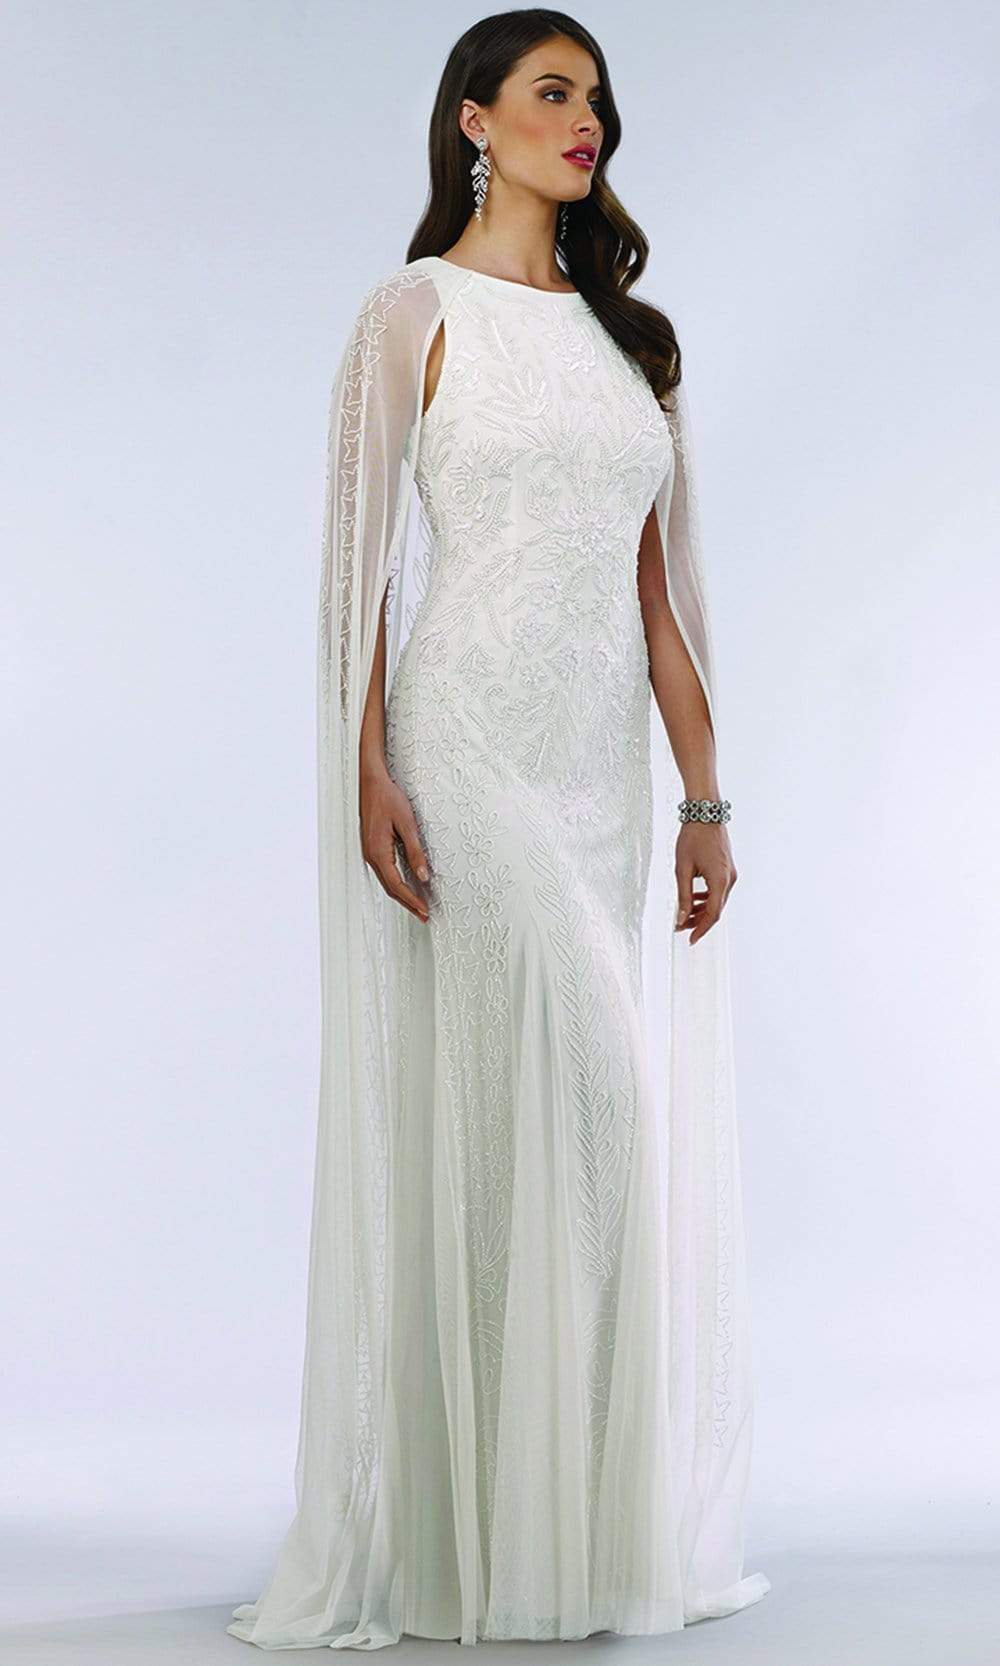 Lara Dresses - 51045 Caped Sleeveless Beaded Lace Bridal Dress
